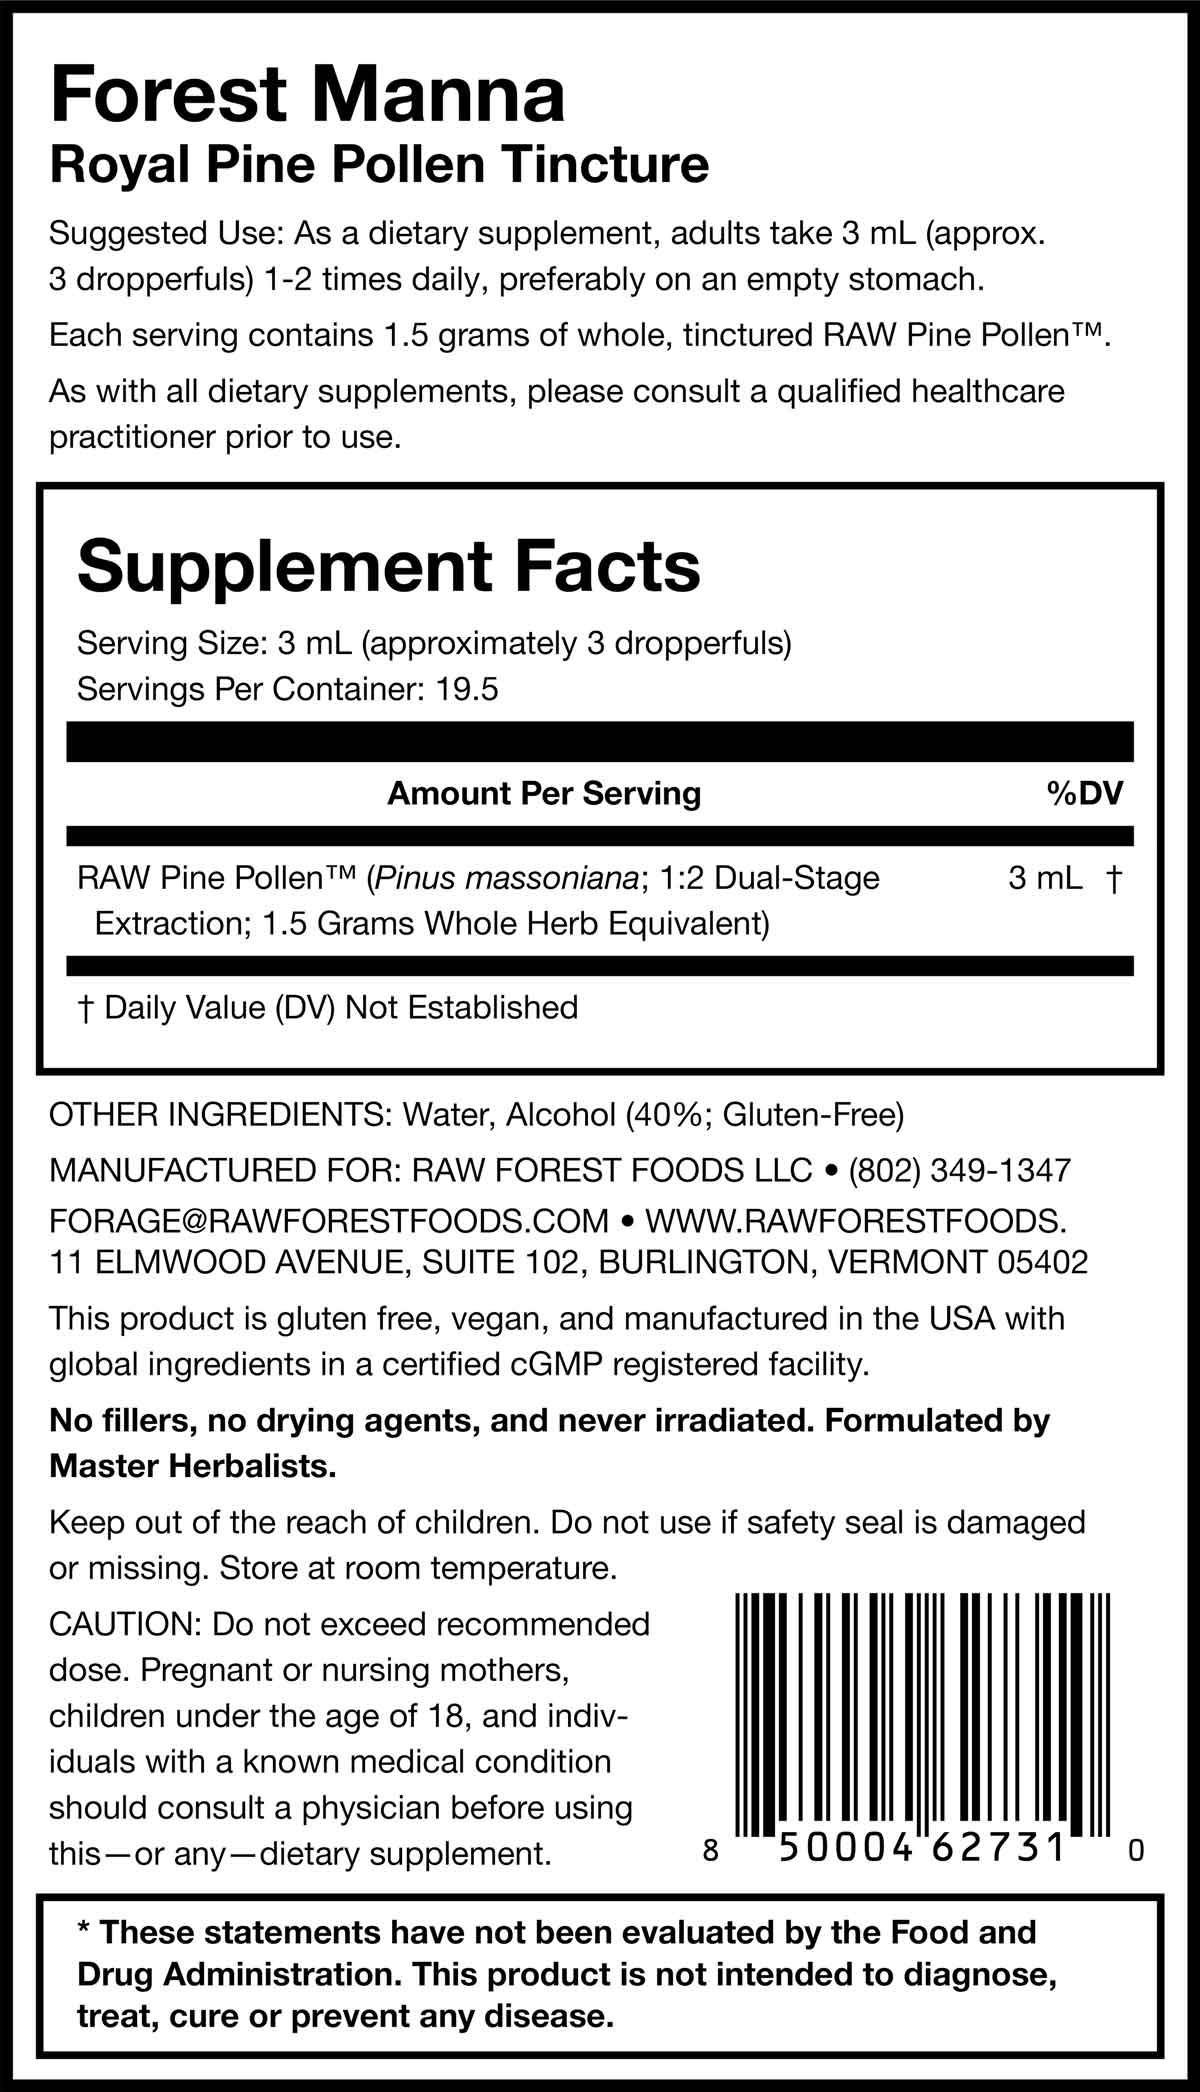 Forest Manna Royal Pine Pollen Tincture 2 Ounce Bottle Supplement Facts Panel